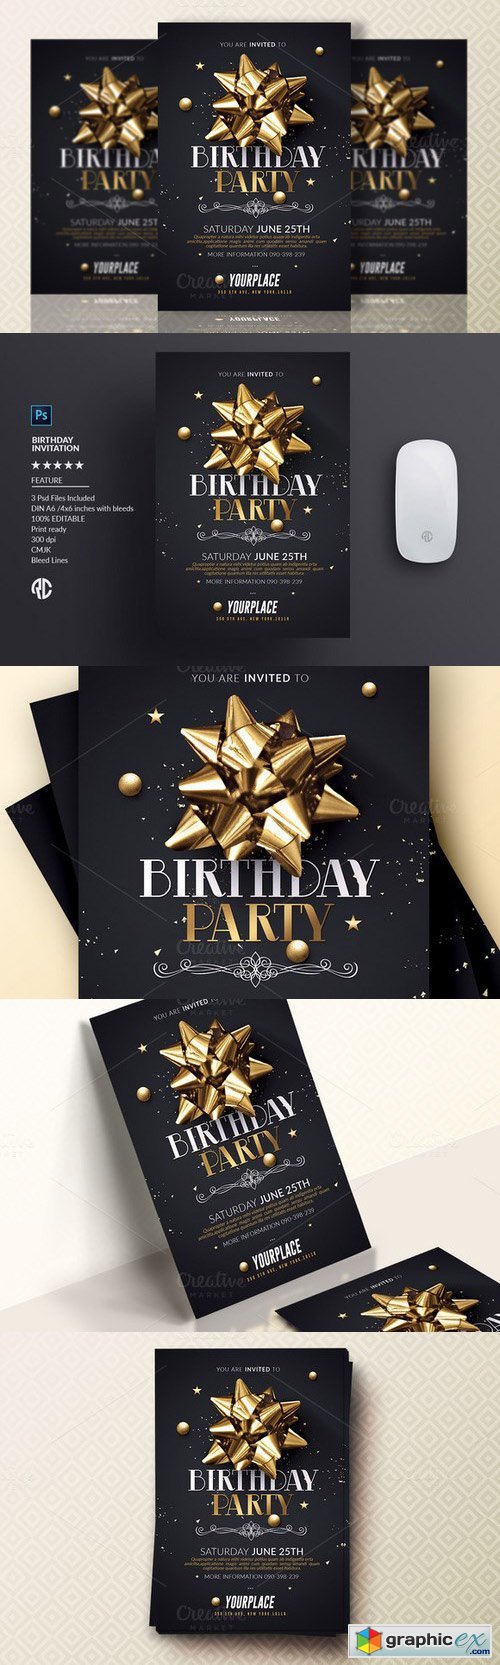 Birthday Party | Invitation Template